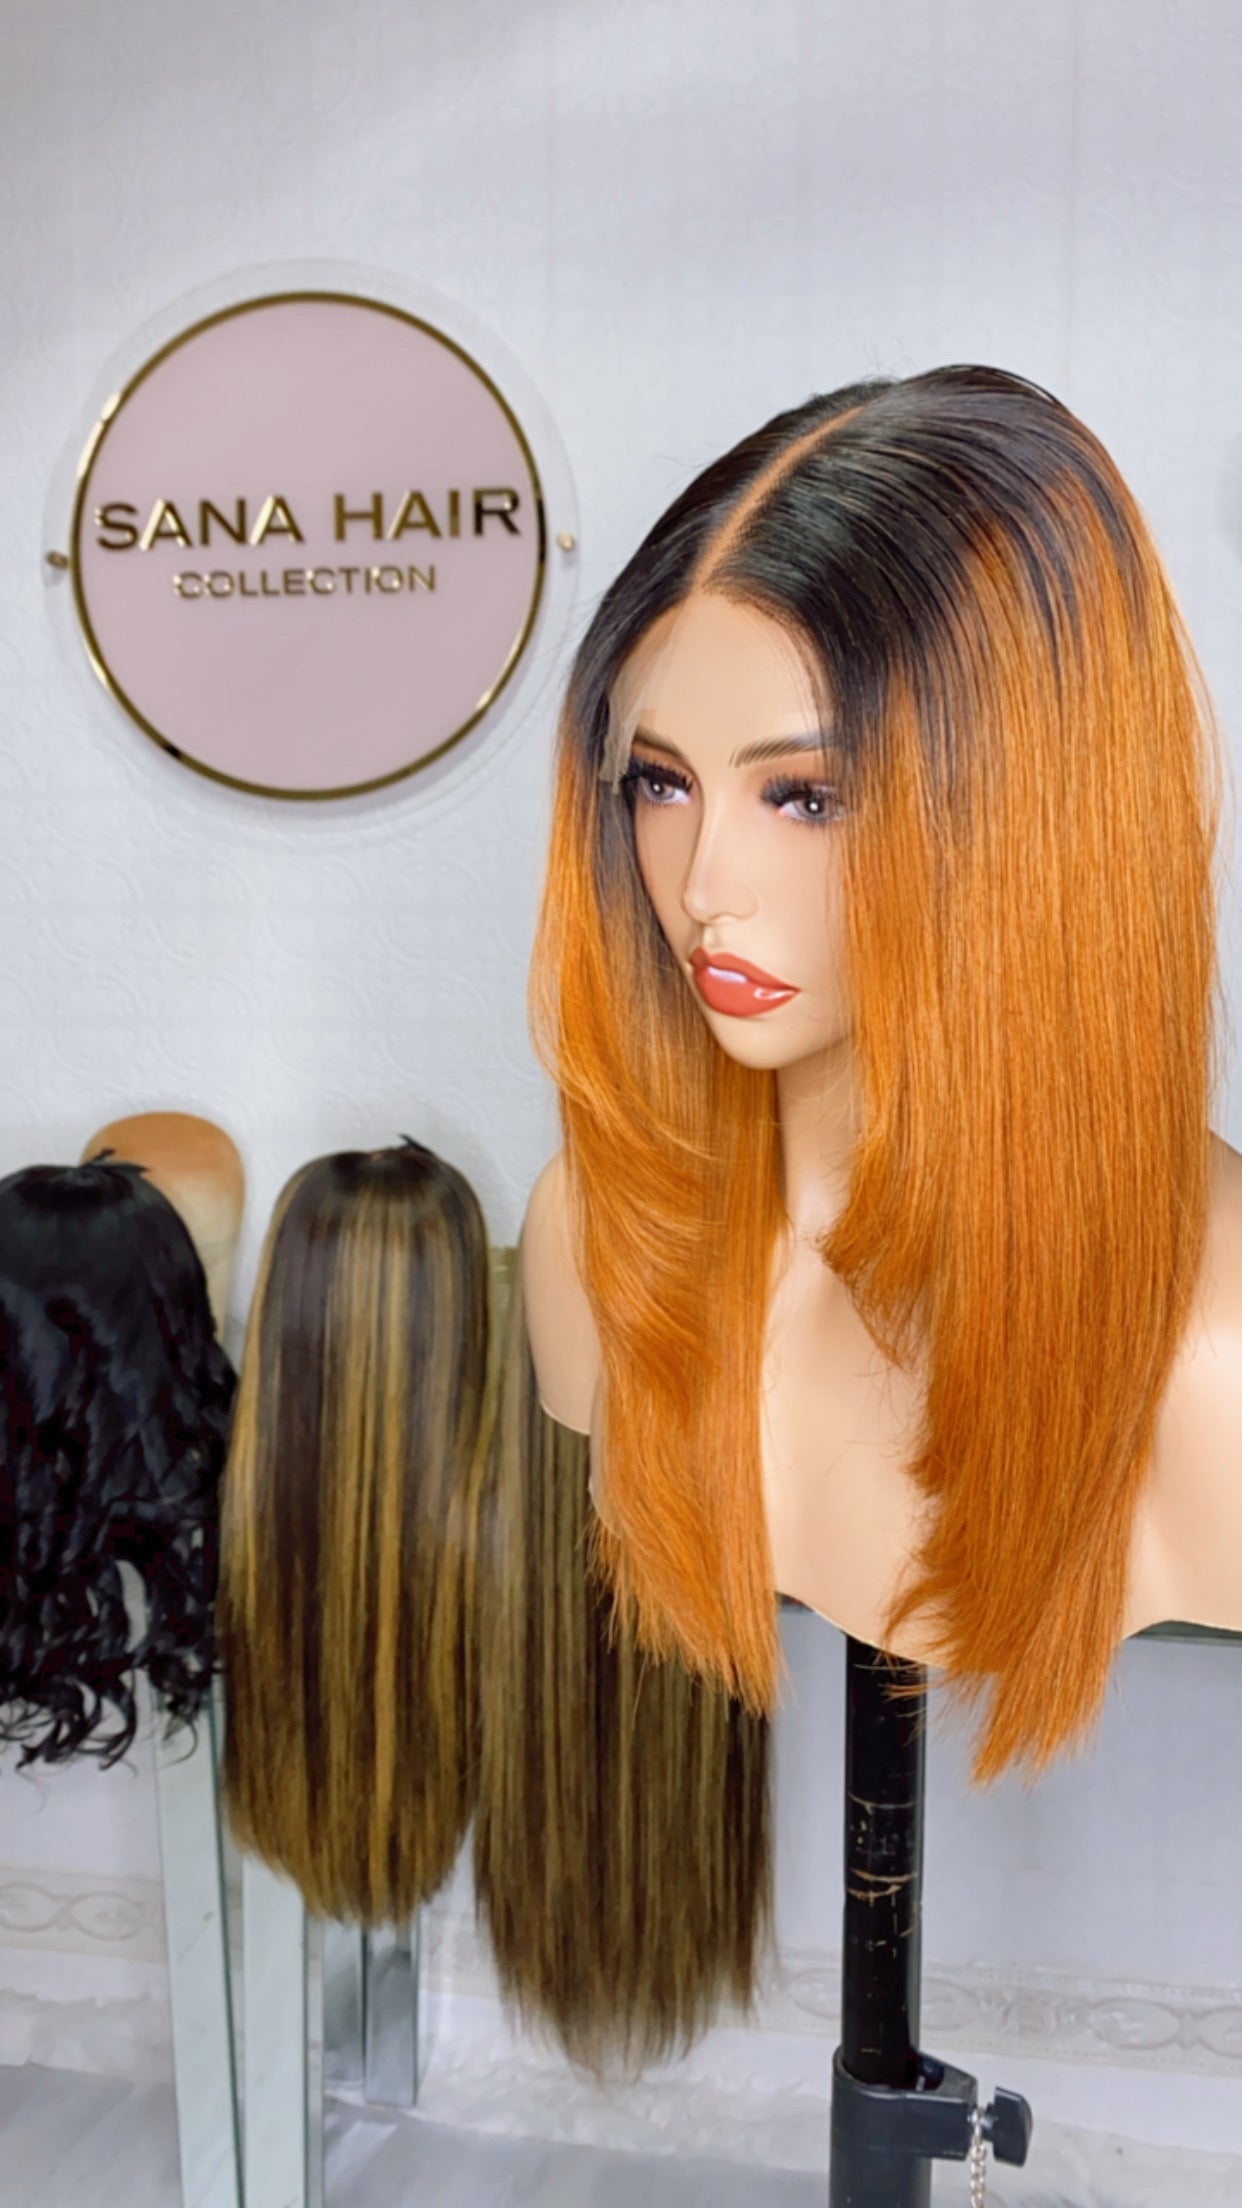 Martinez - Sana hair collection